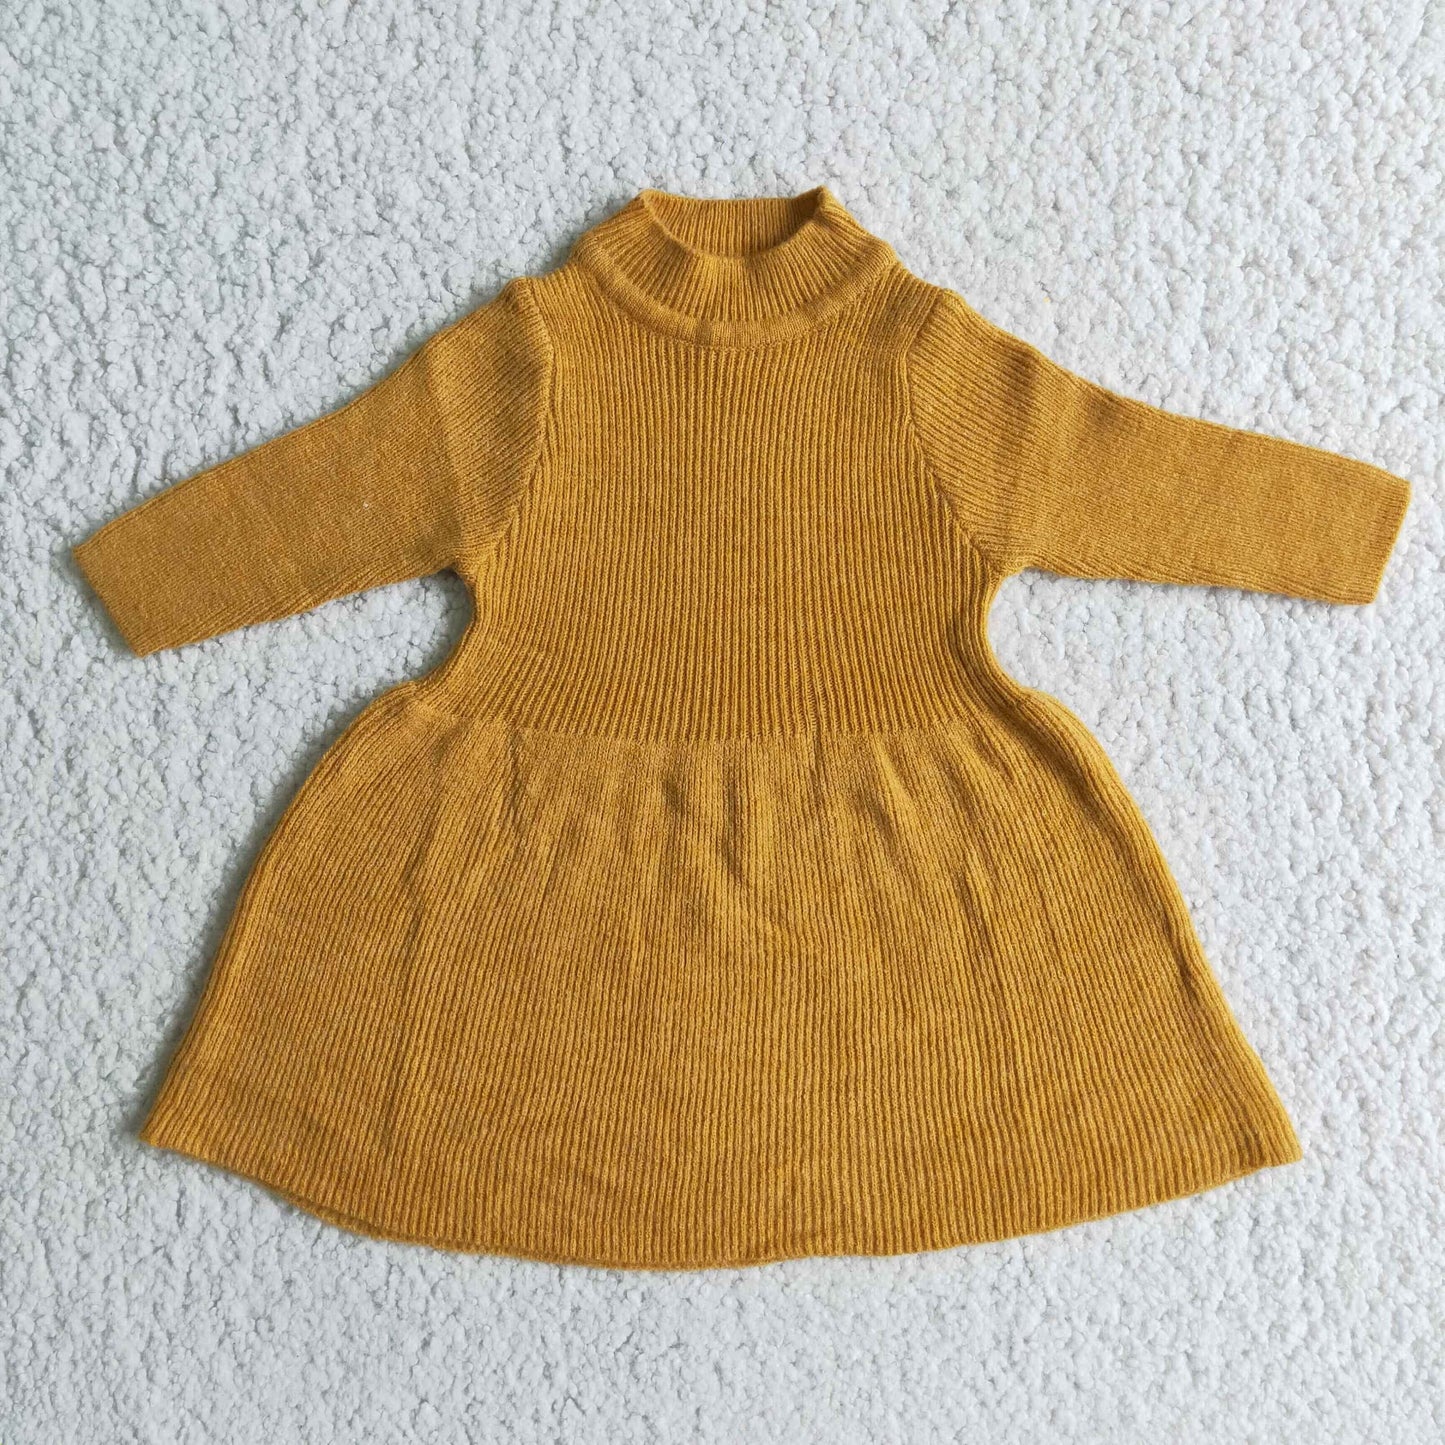 Baby girls long sleeve fall winter sweater